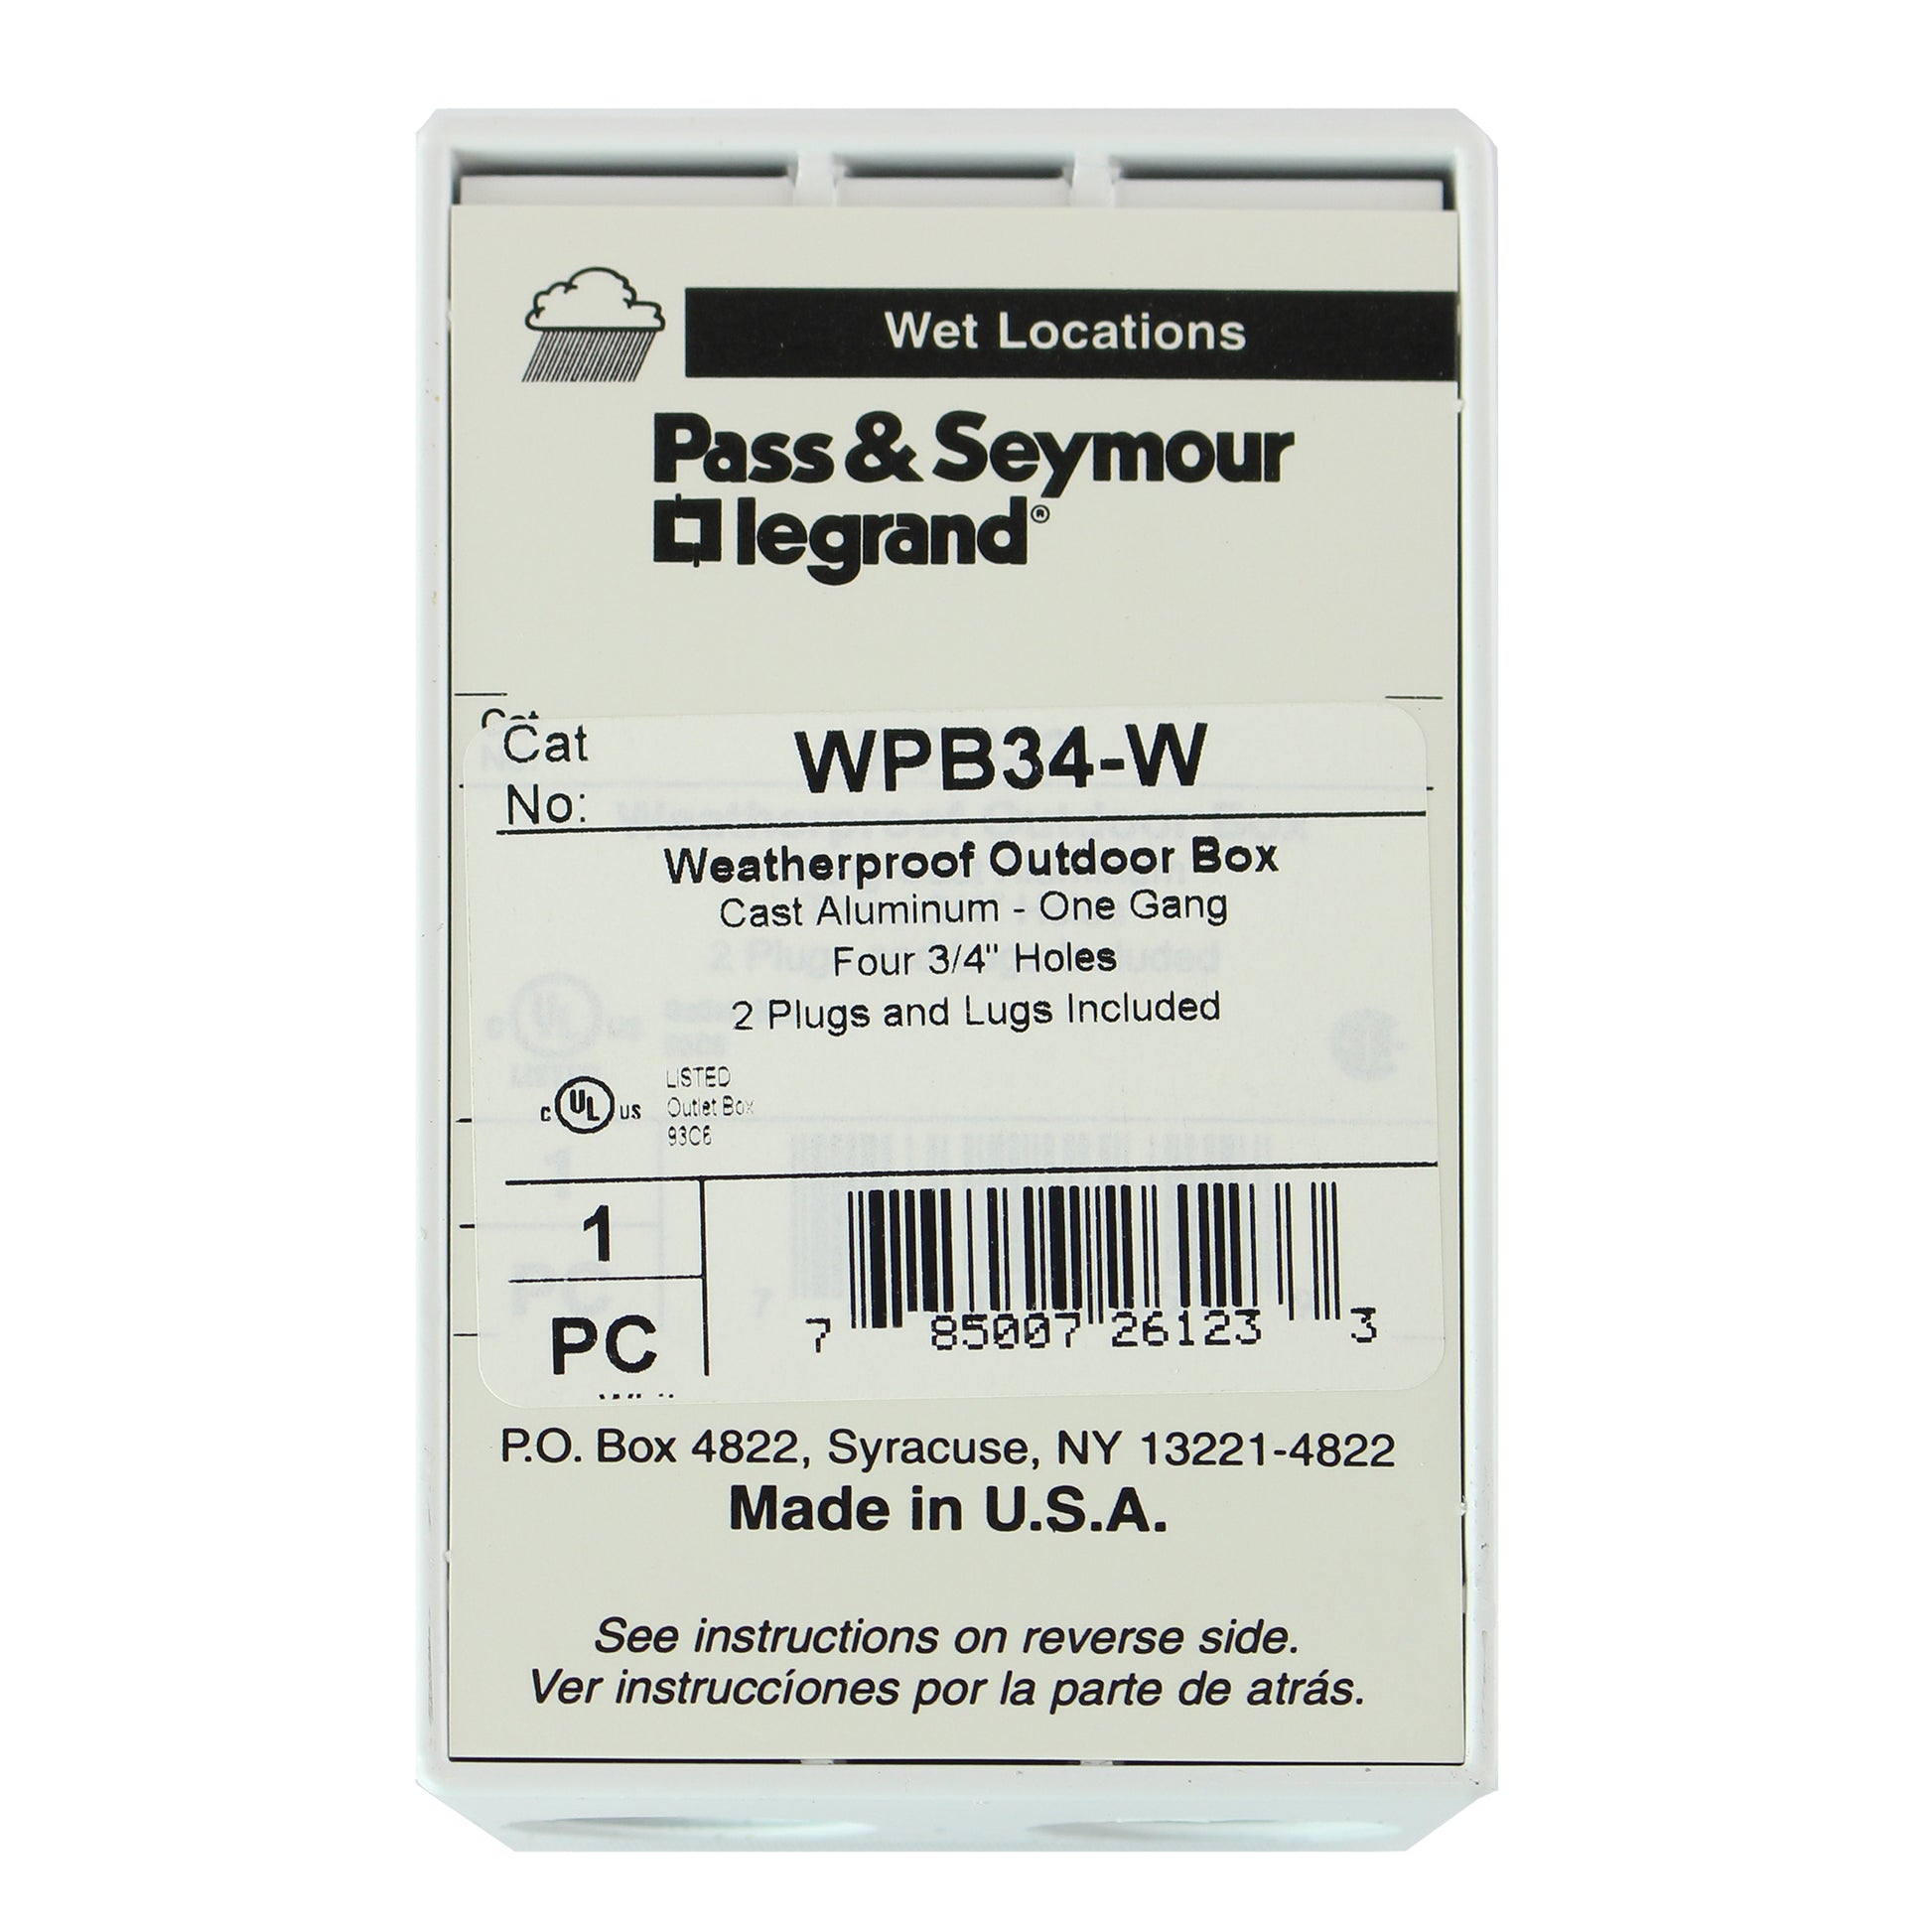 Pass & Seymour Legrand WPB34-W